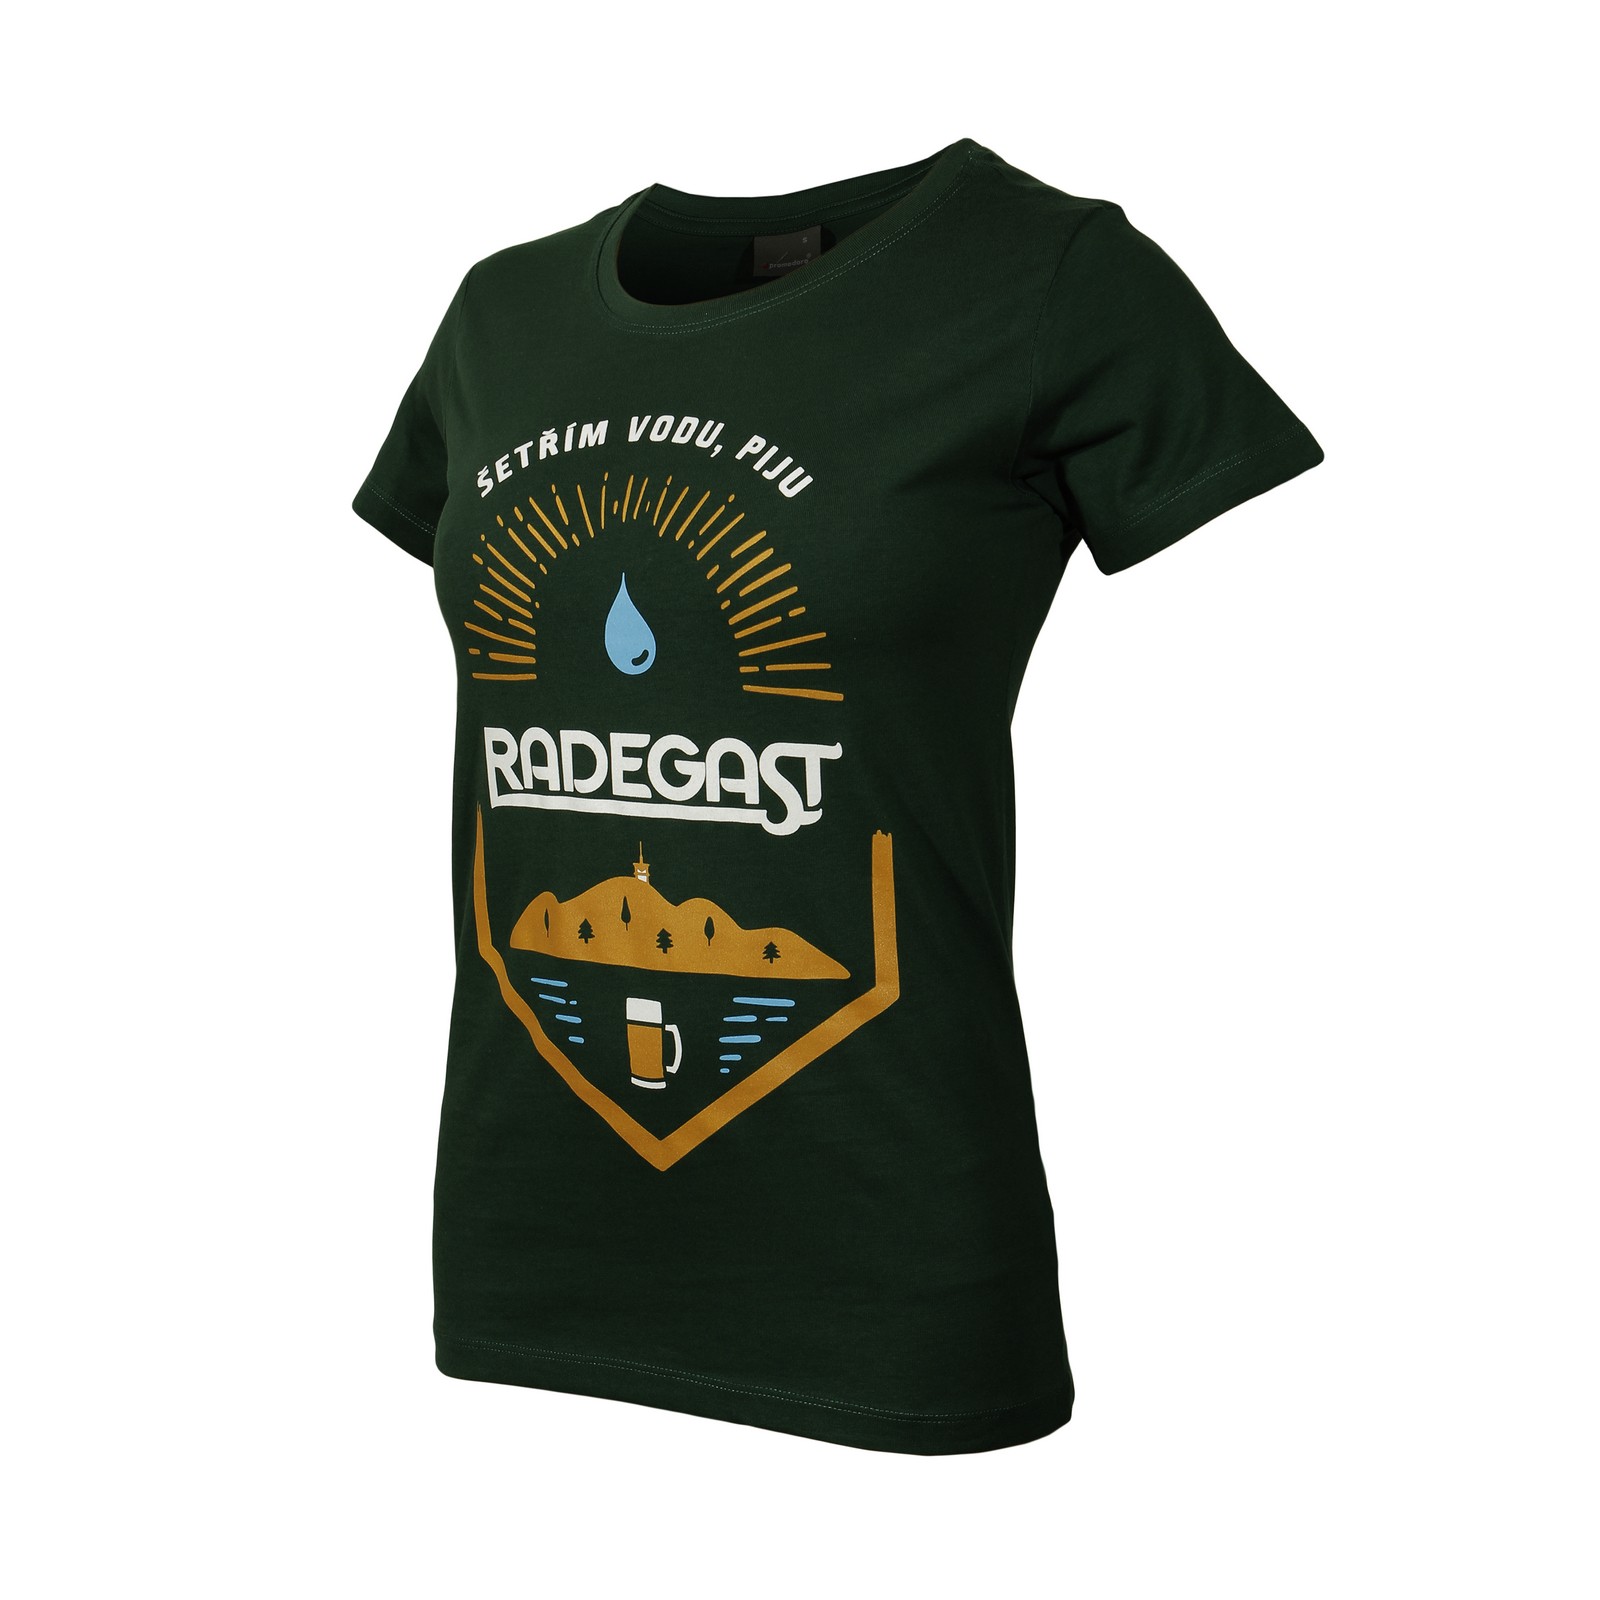 Women's T-shirt Radegast Water drop